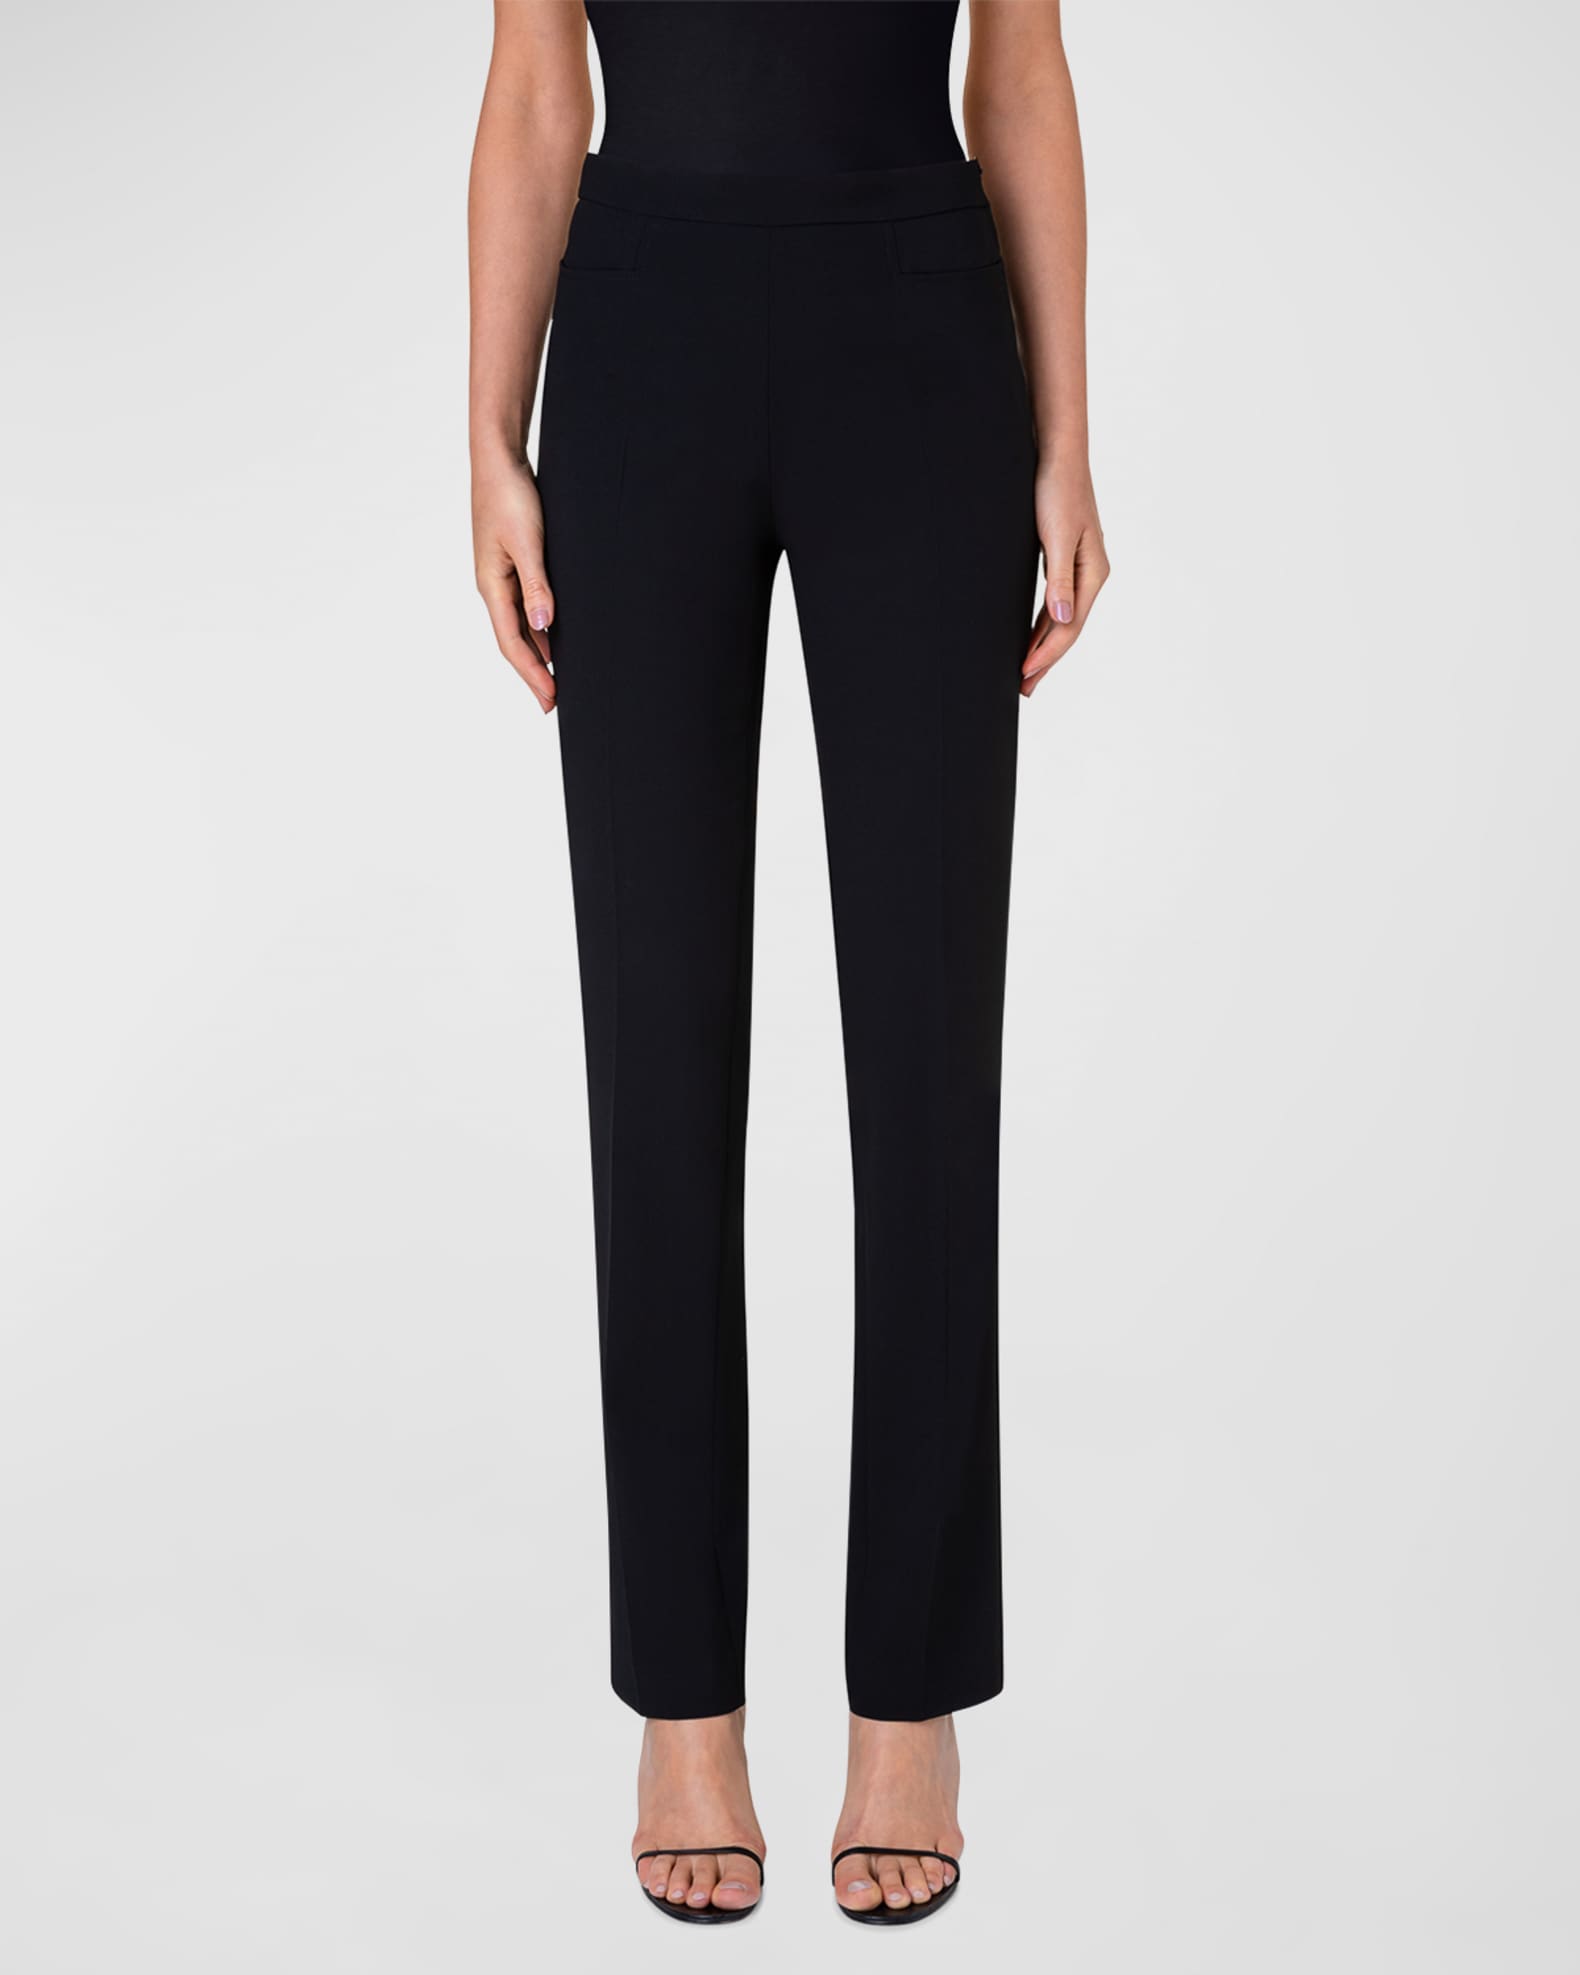 Francoise Slim-Straight Pants, Black 0